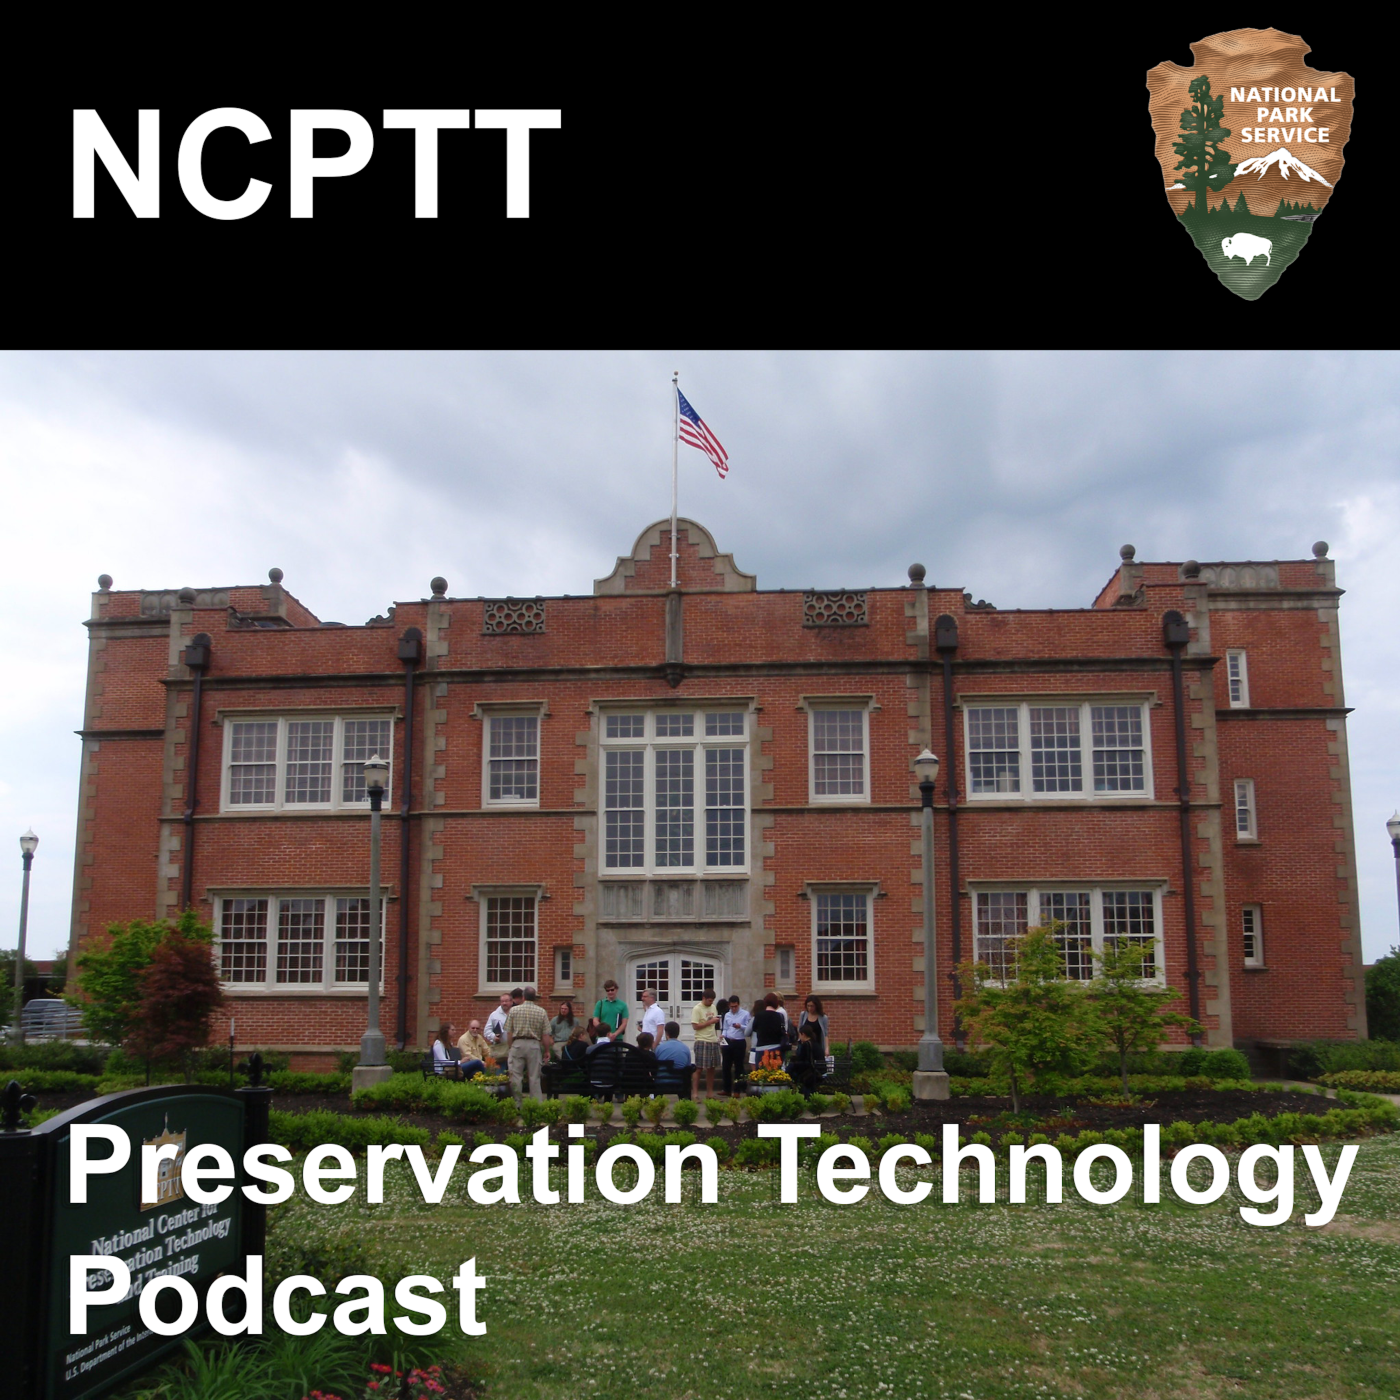 The Preservation Technology Podcast